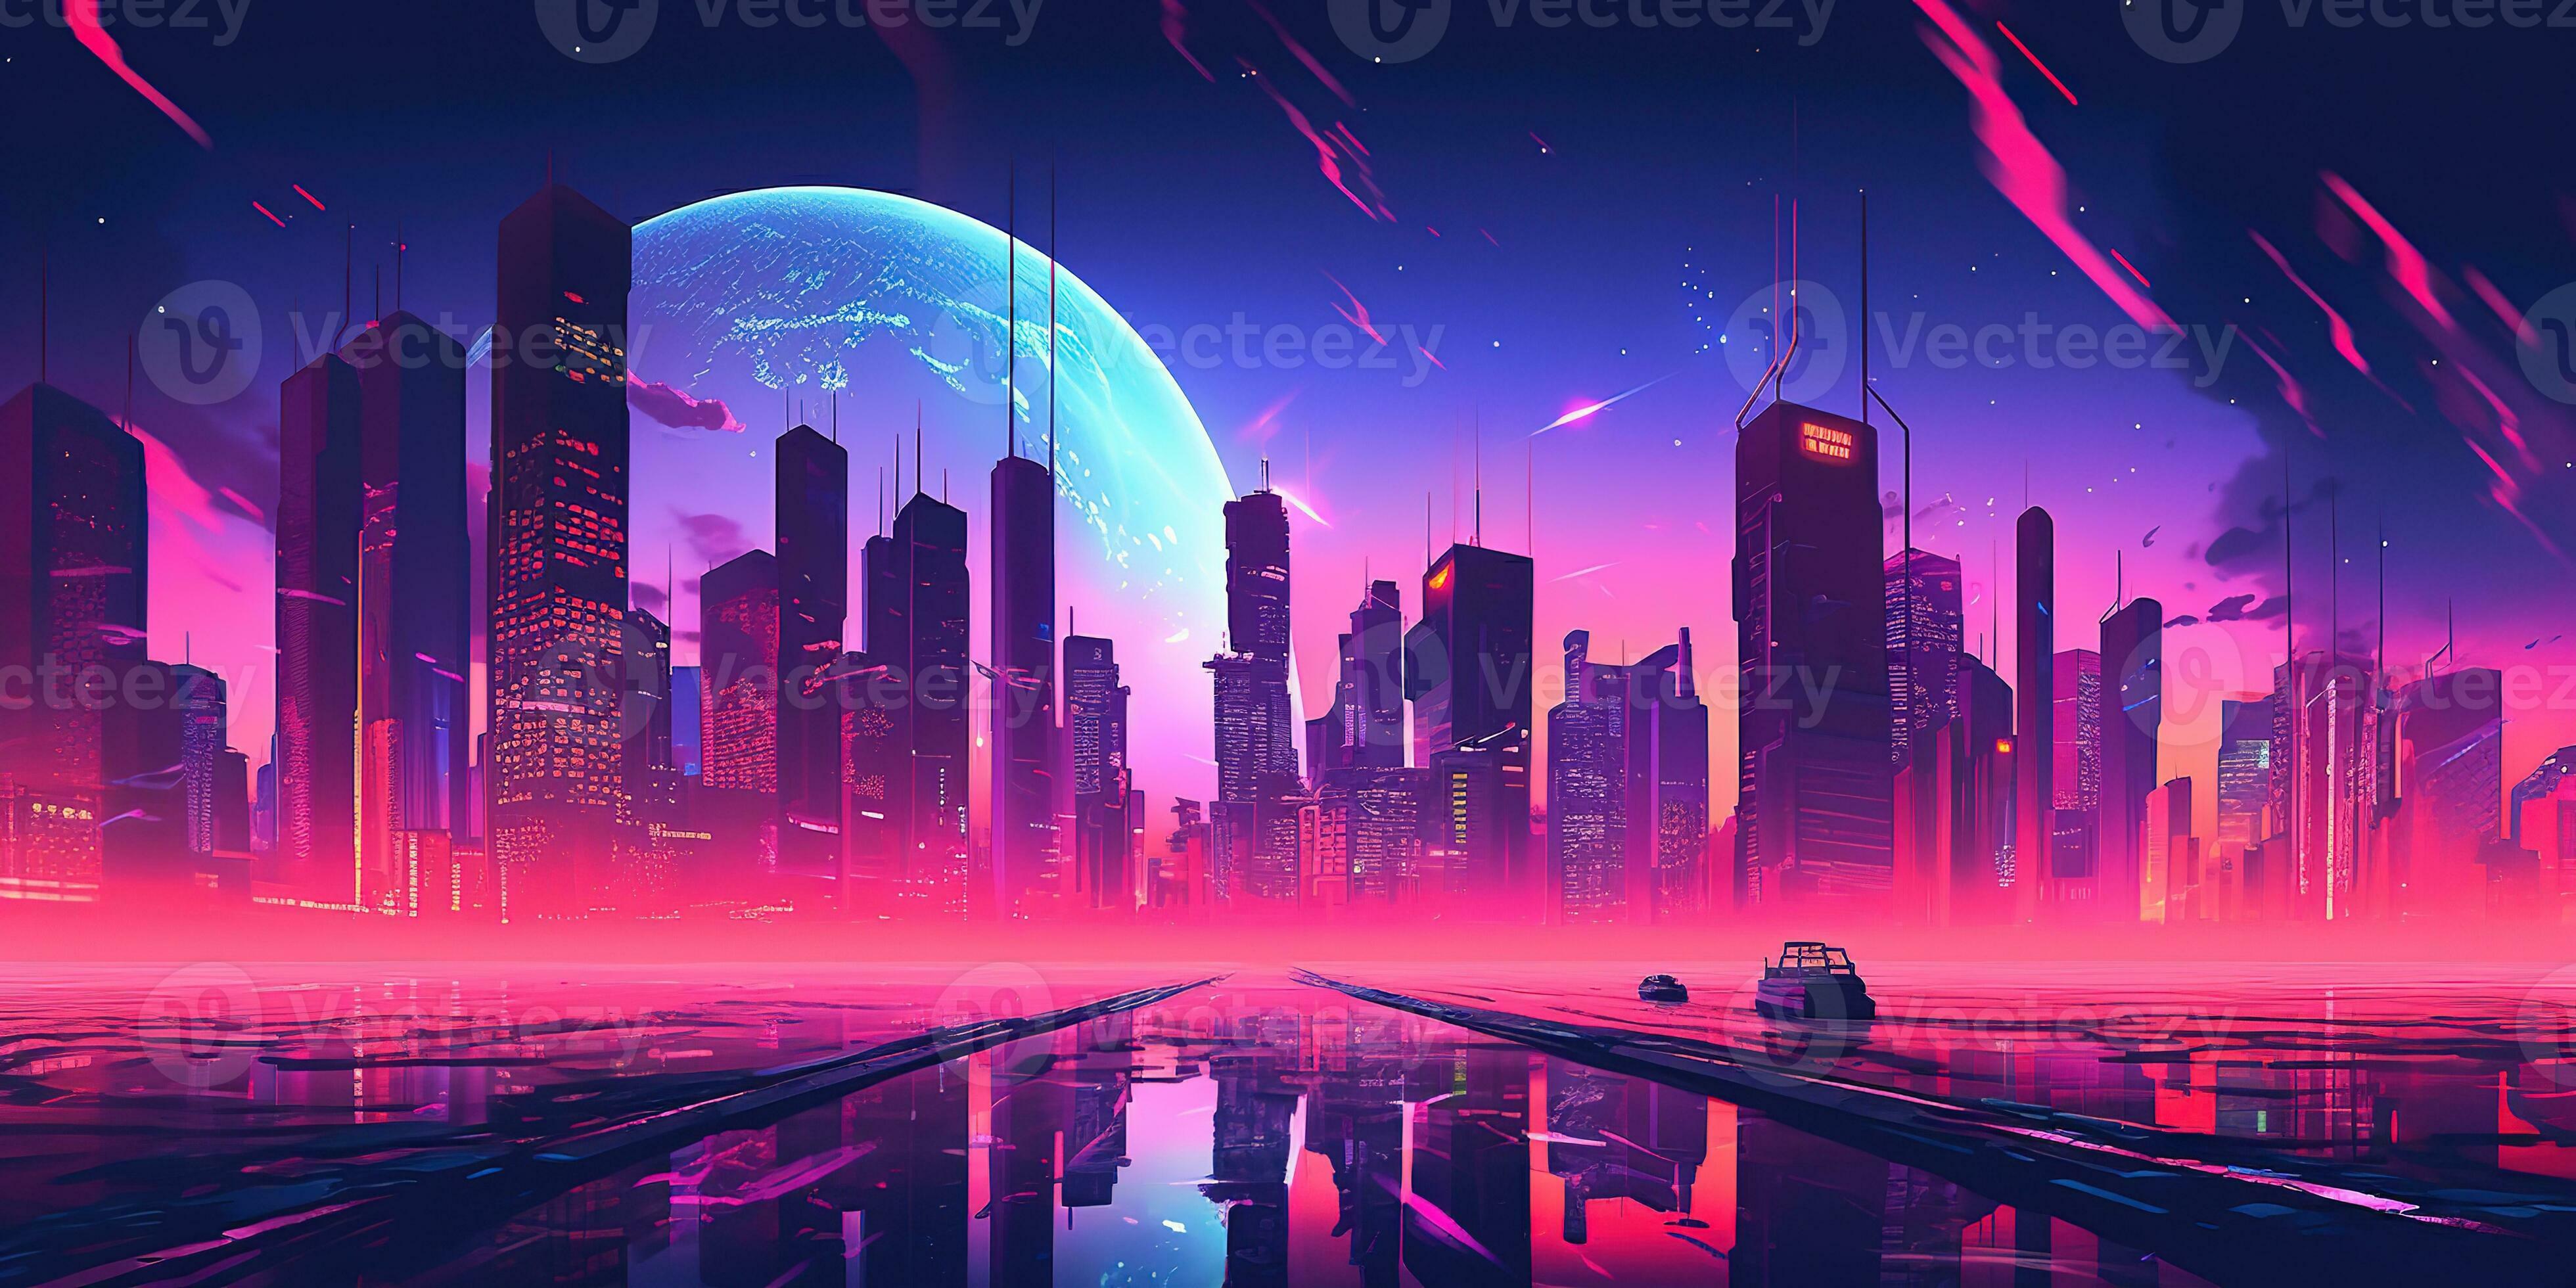 Neon City | City wallpaper, New york wallpaper, City aesthetic